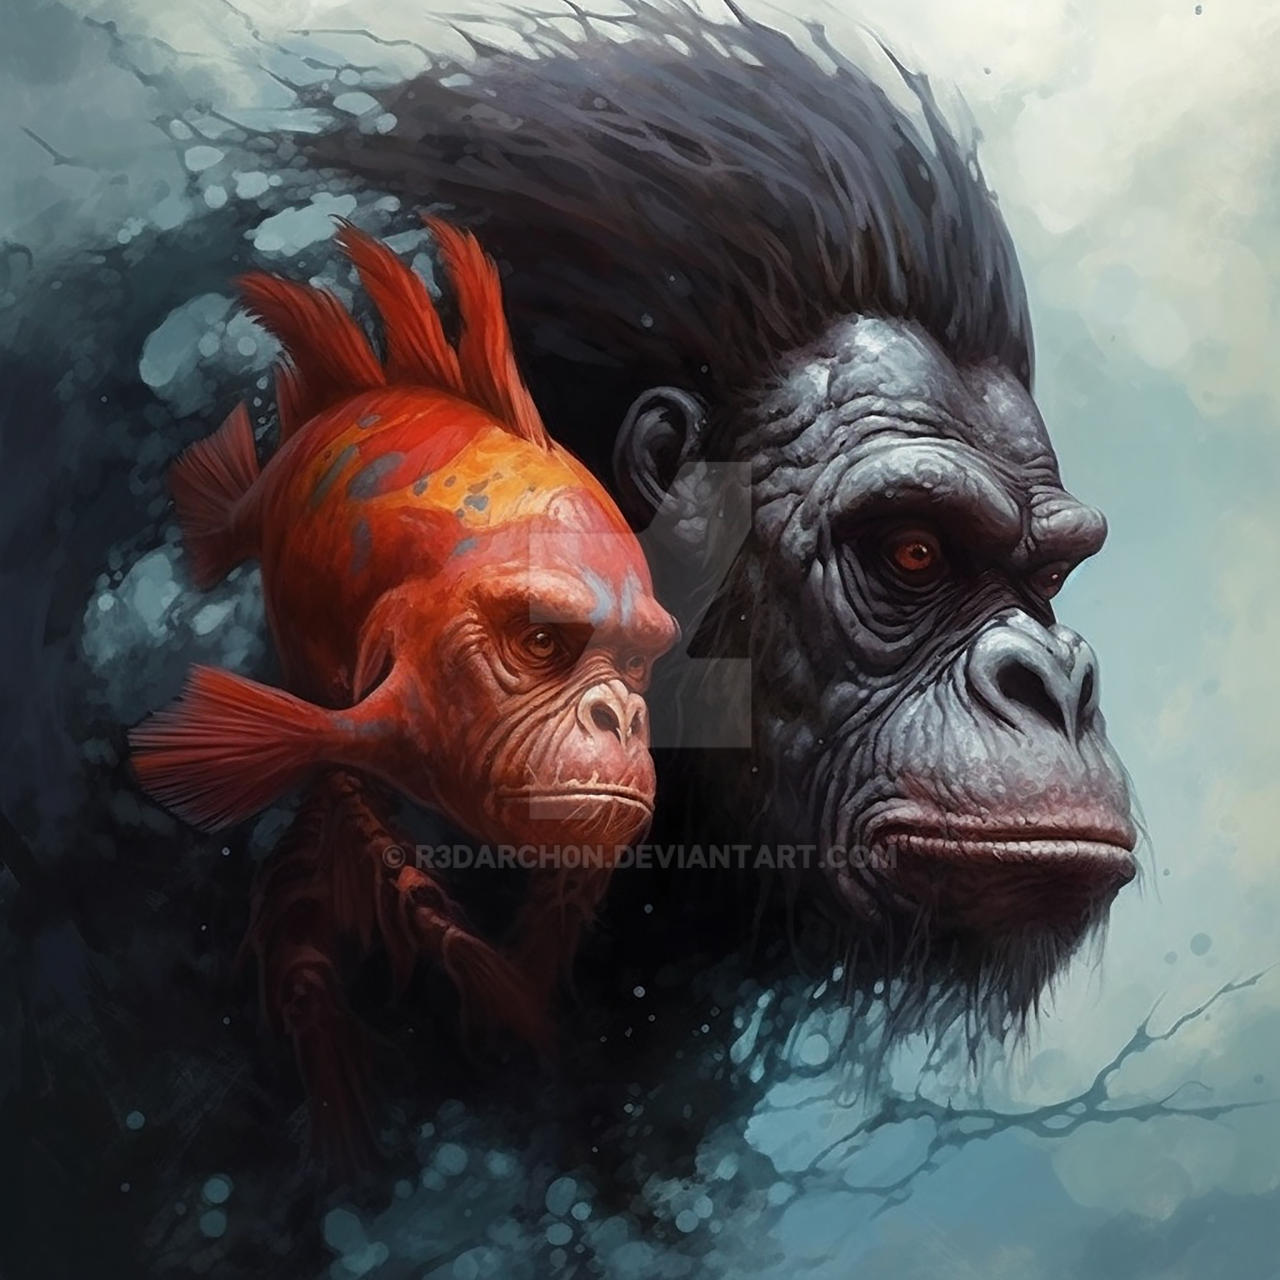 Biocybernetics: Gorilla Fish Hybrid by R3dArch0n on DeviantArt